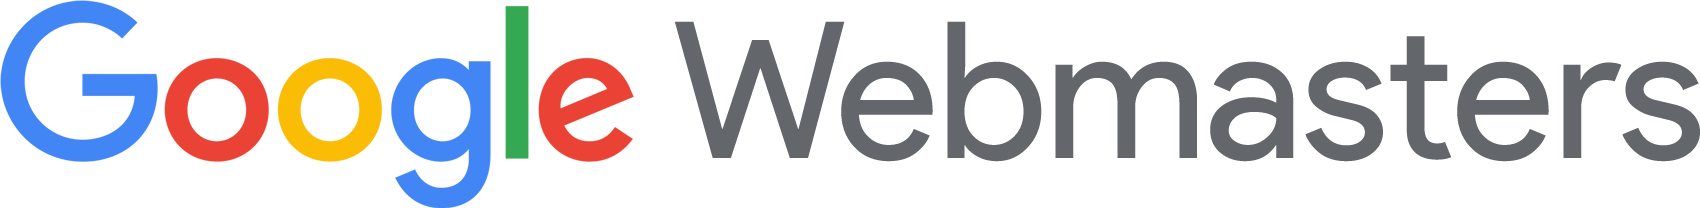 Webmaster Logo - Google Webmasters